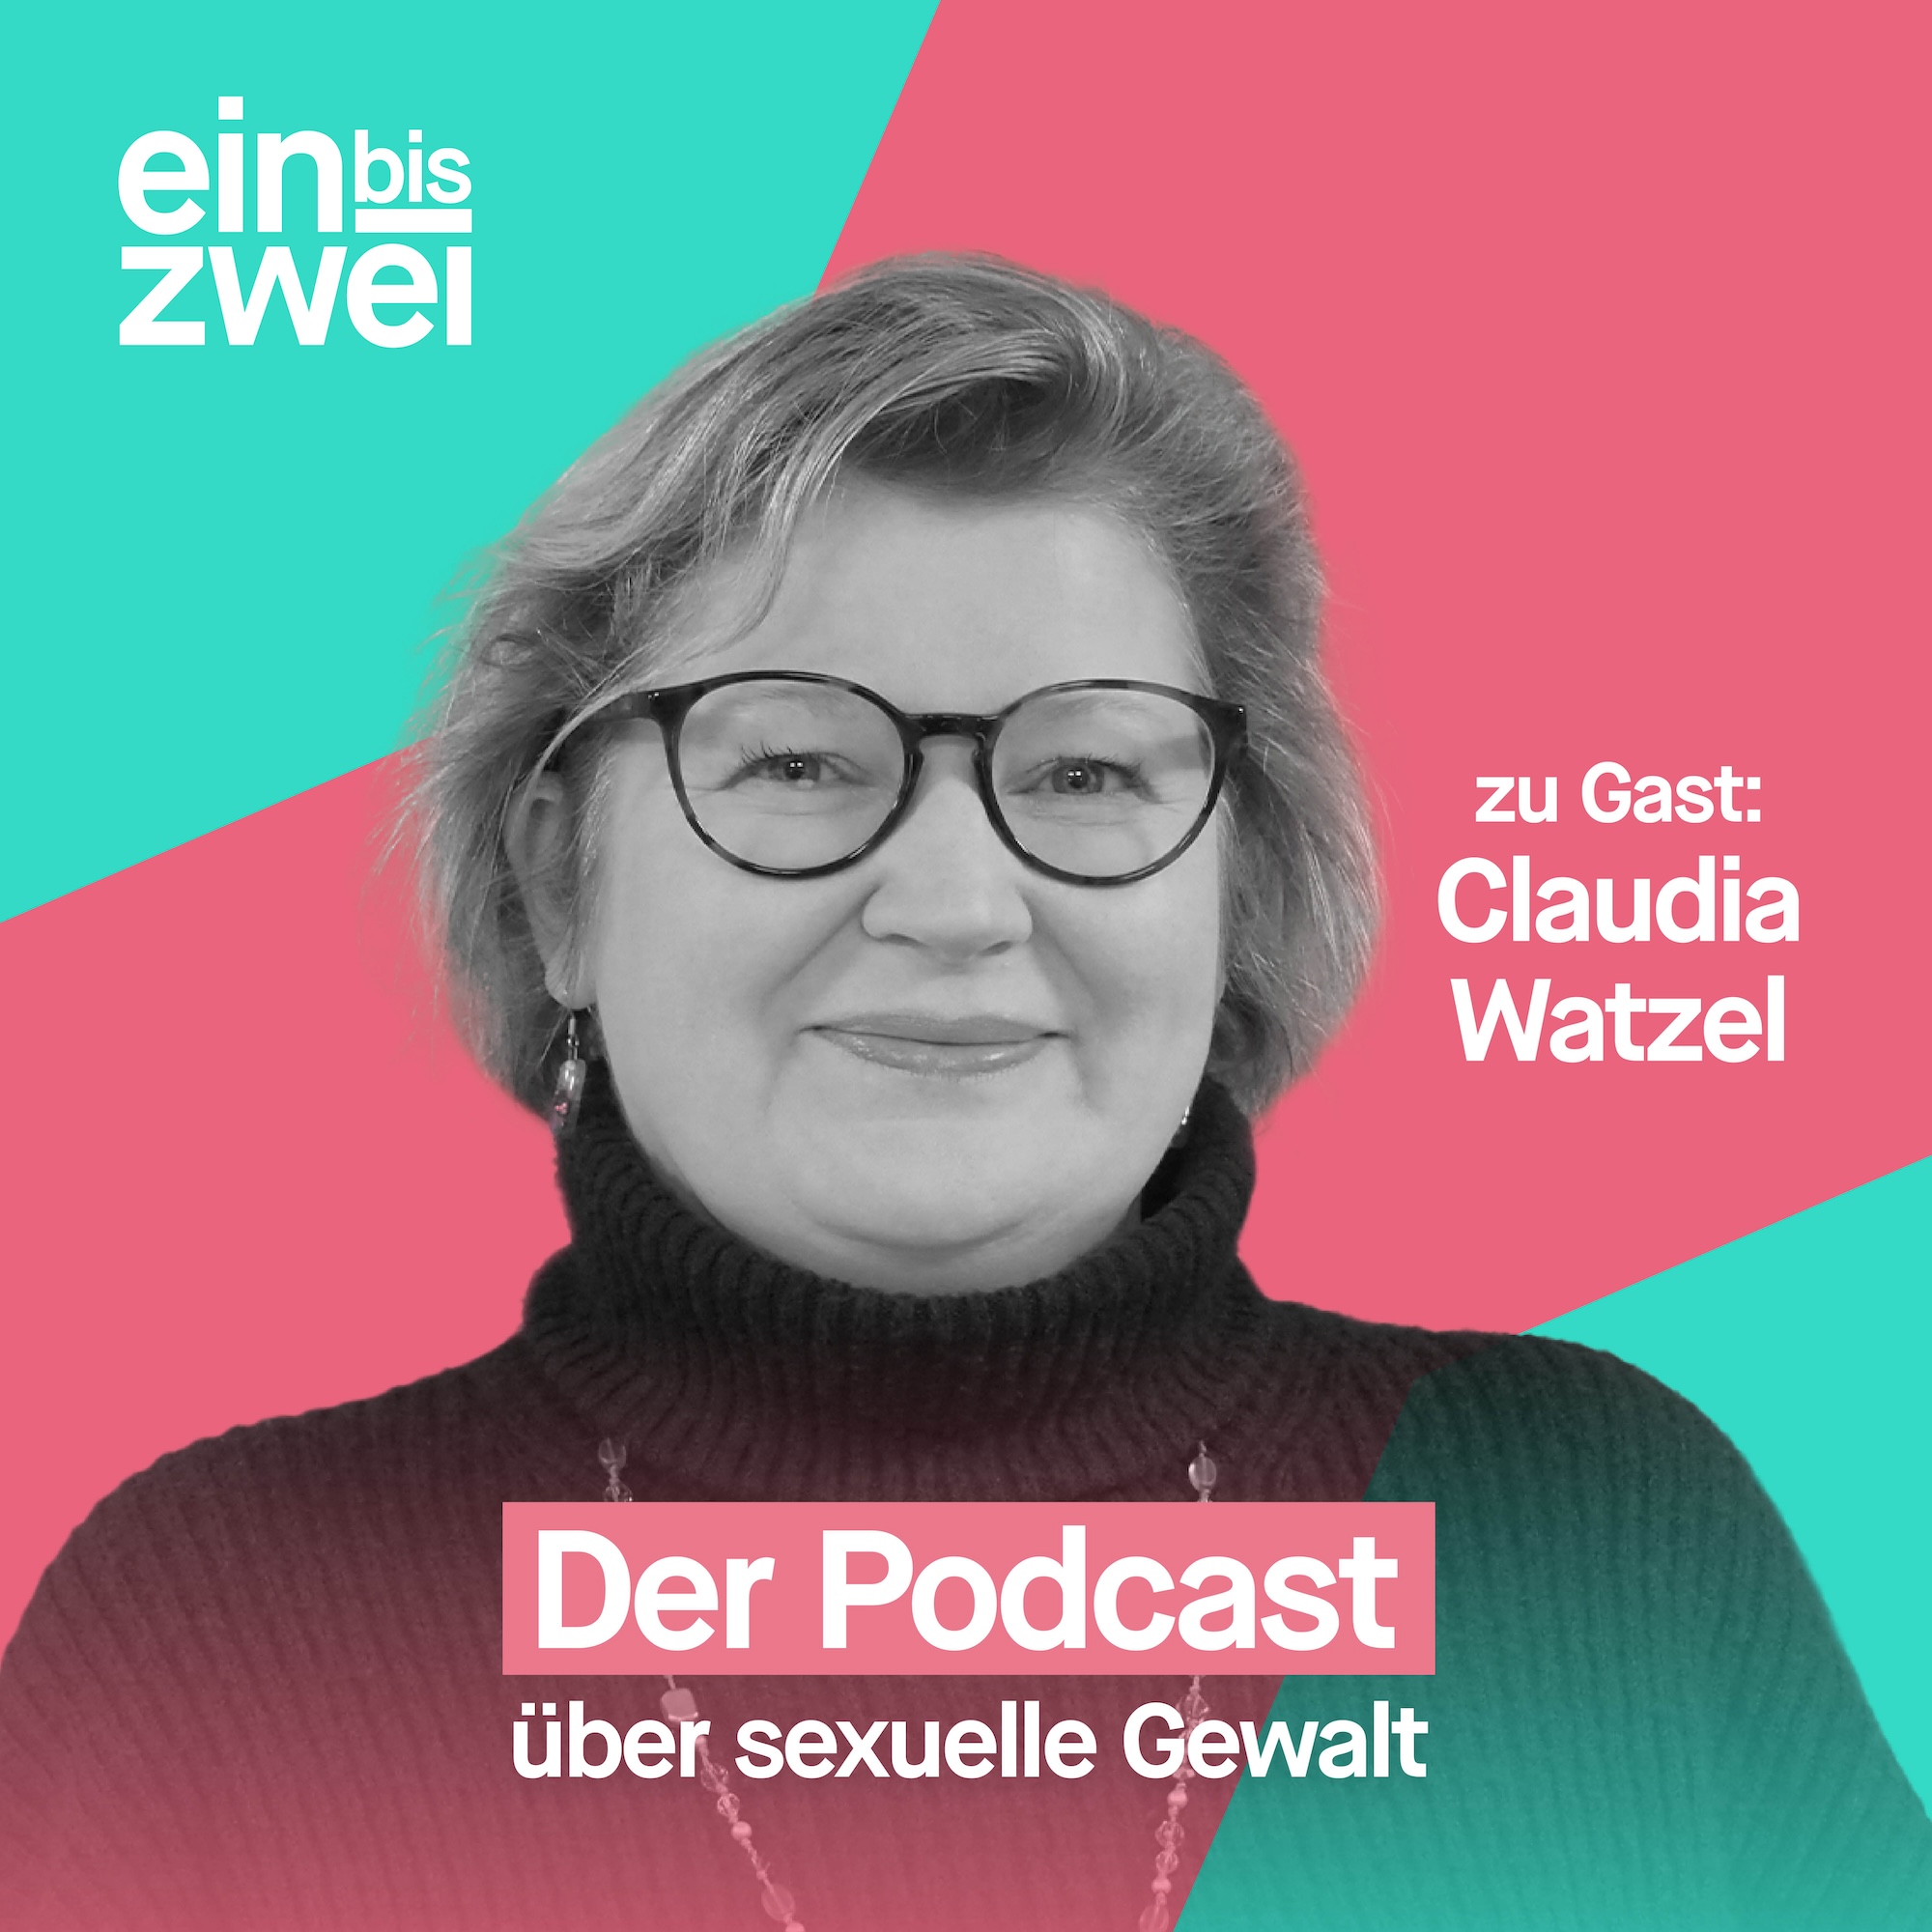 Claudia Watzel